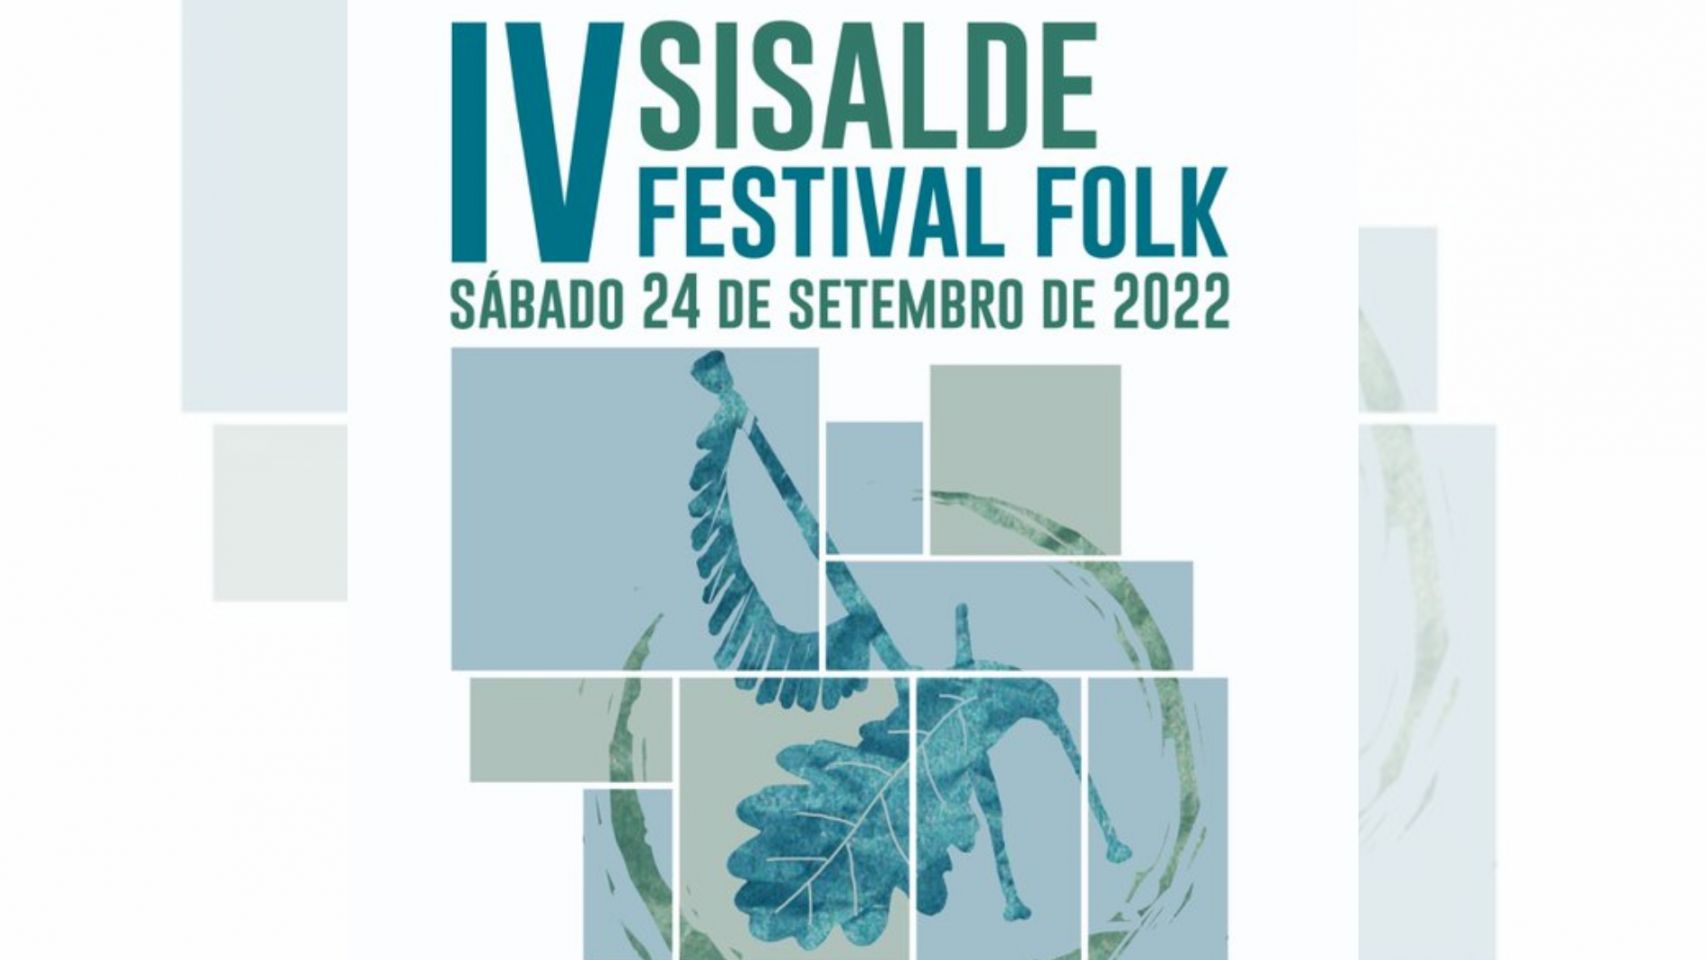 Cartel del IV Festival de Folk Sisalde.